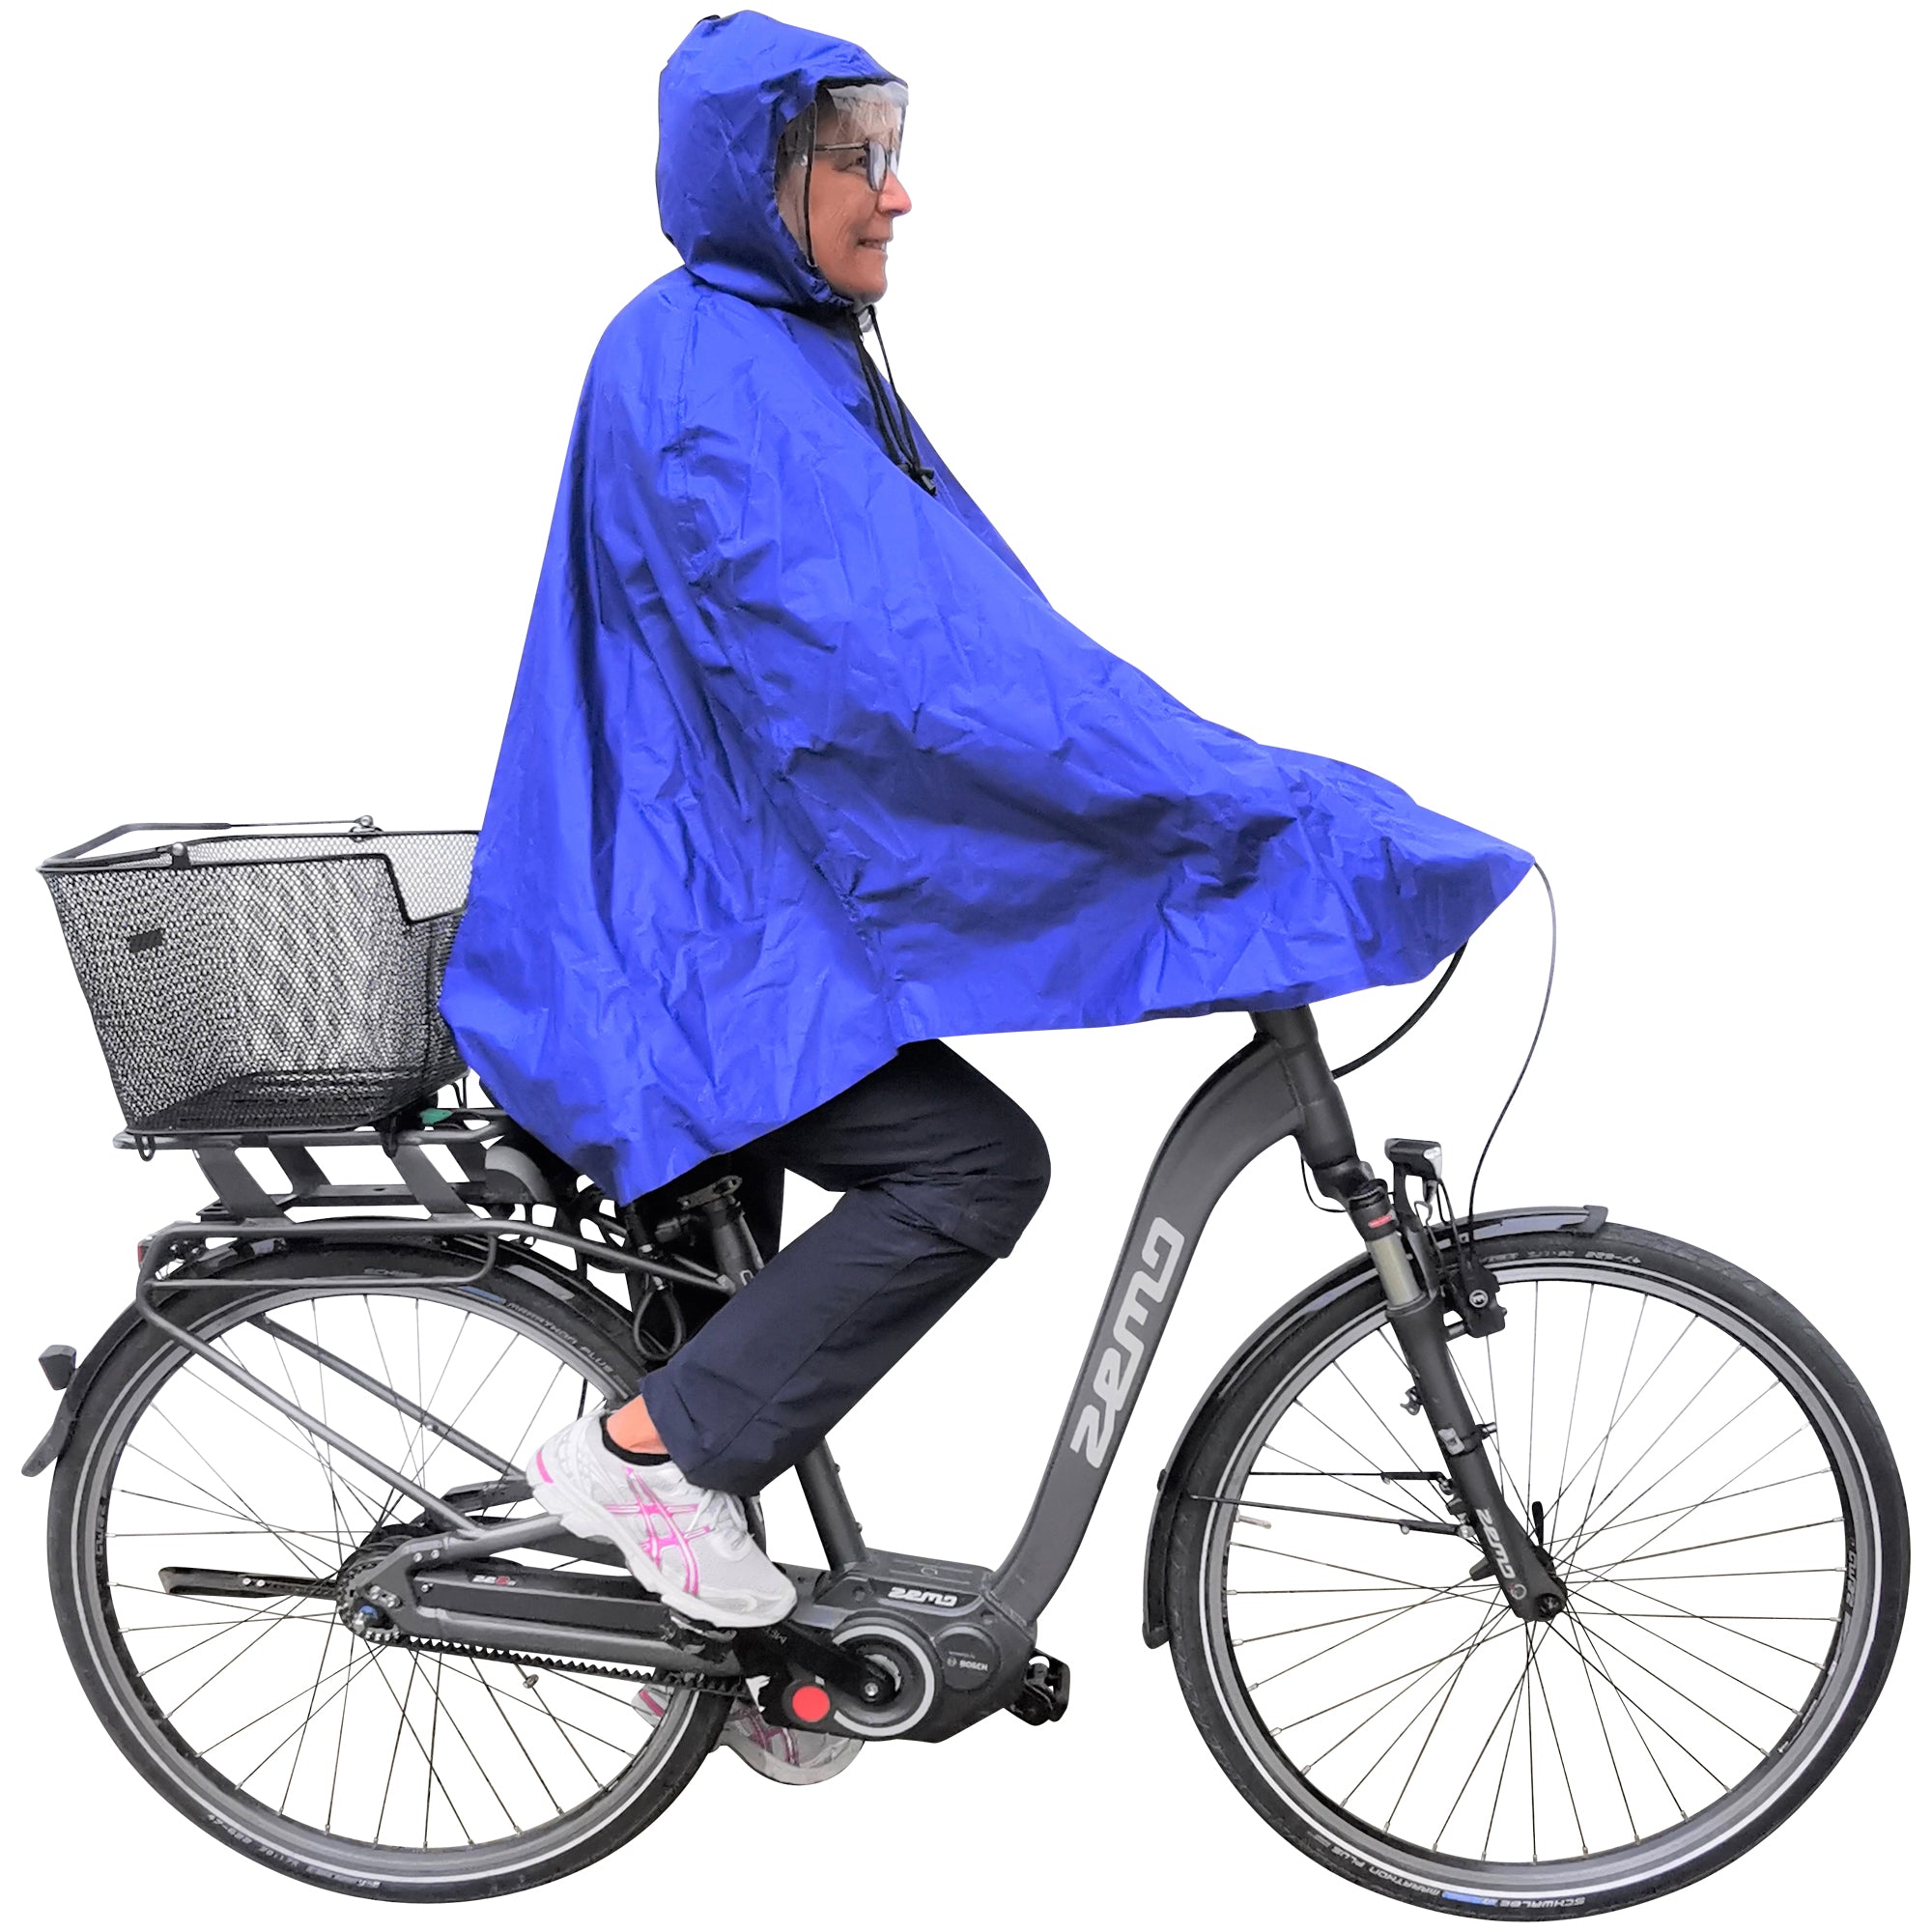 Regenponcho - Fahrrad Poncho in 3 Farben Royal Blau , Horizon Blue , Sandy Beige